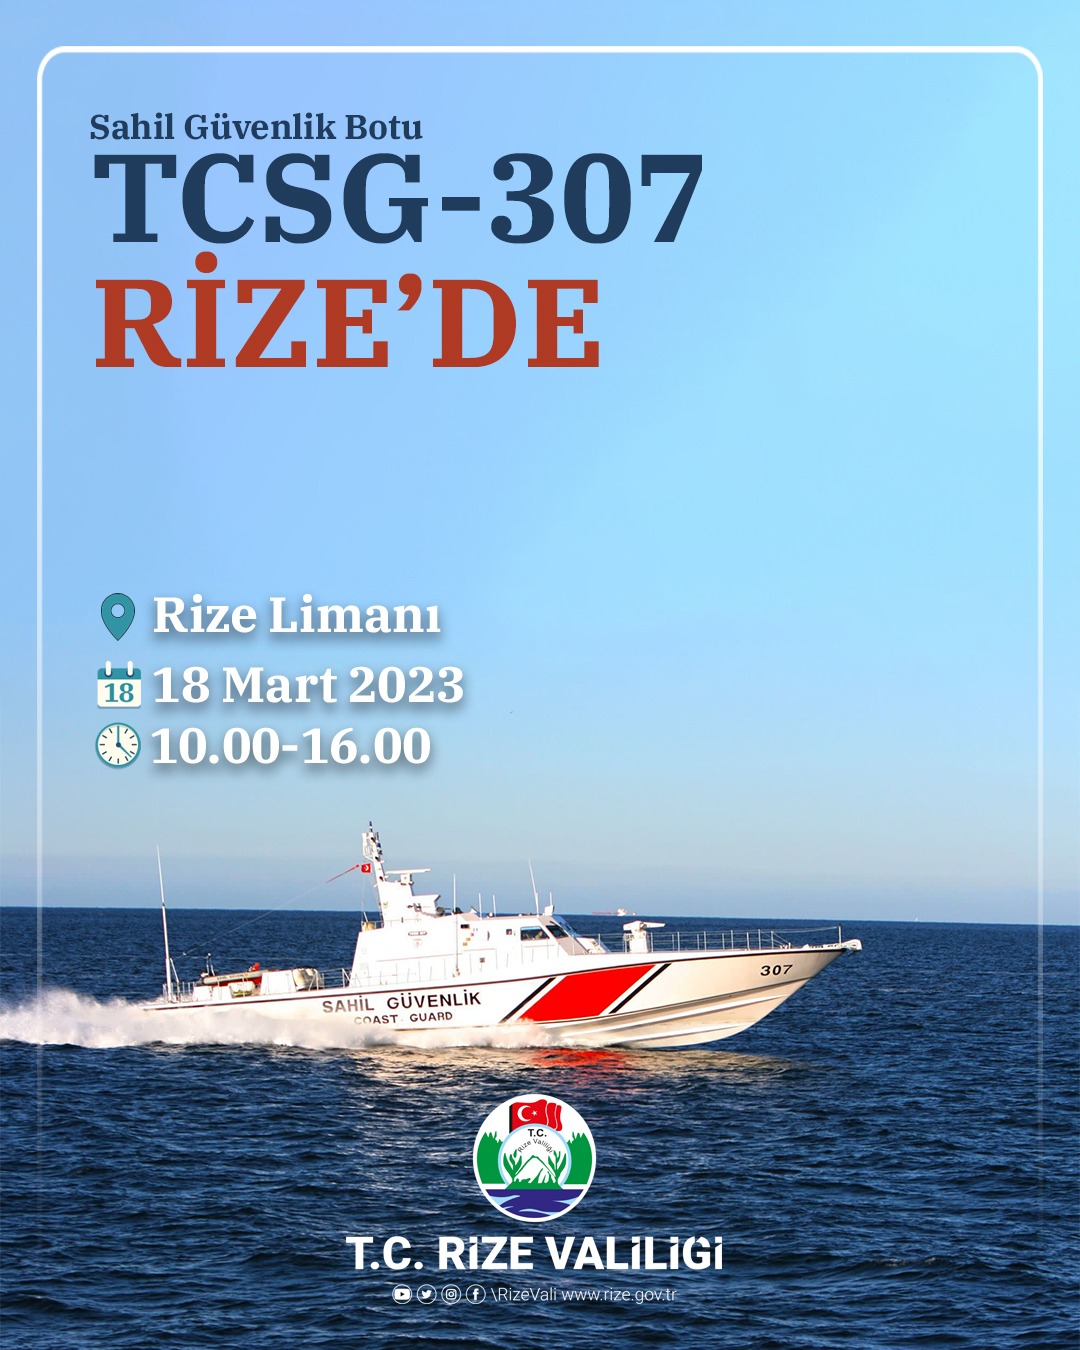 Sahil Güvenlik TCSG 307 botu Rize de